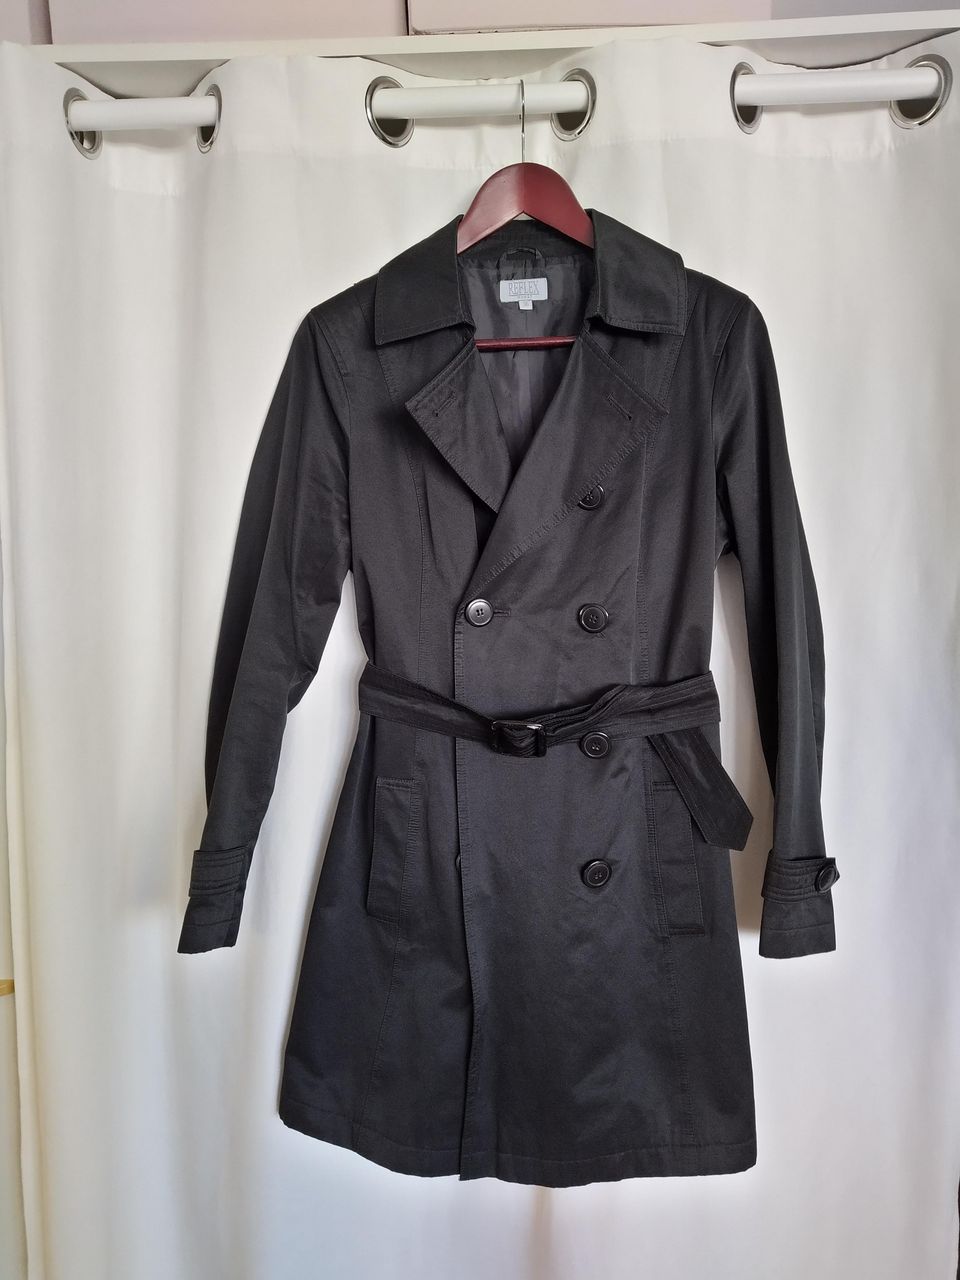 REFLEX TRENSSI naisten takki, koko 36